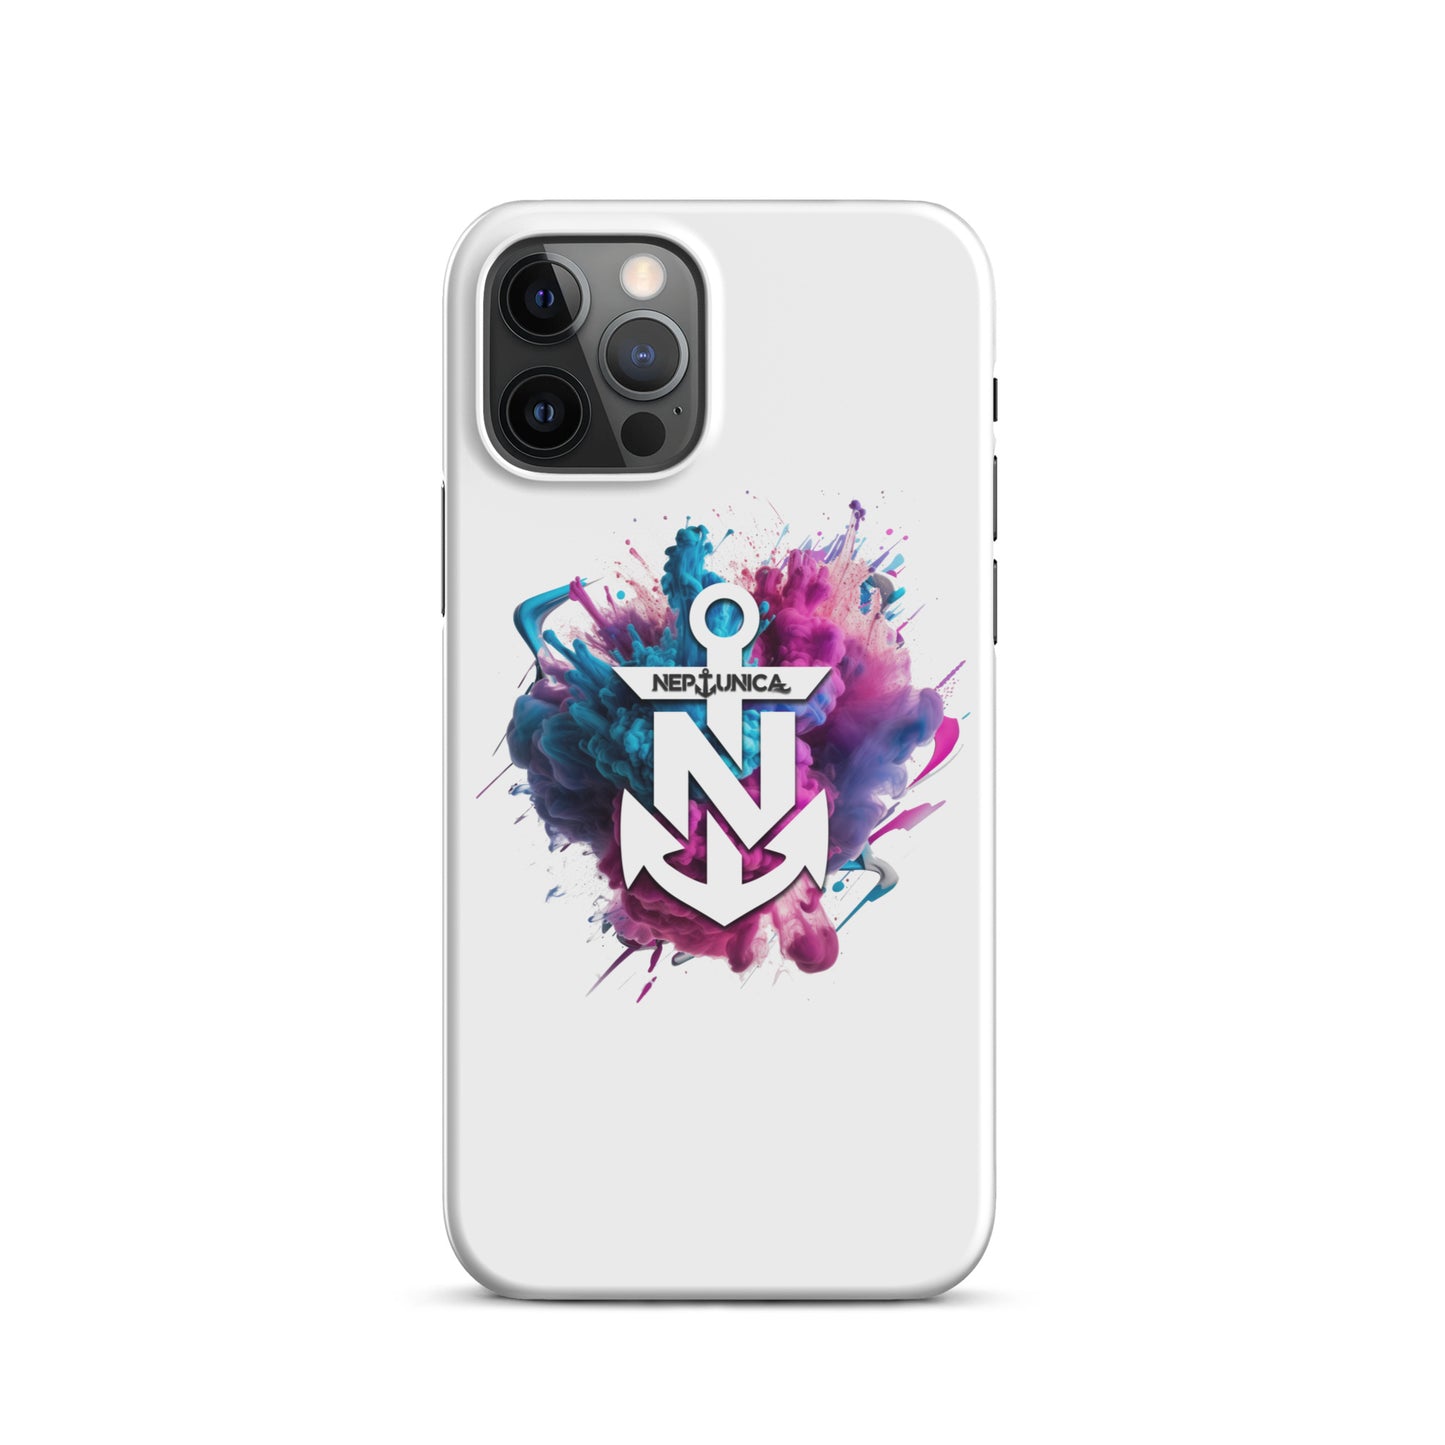 Neptunica iPhone® Case | Colorsplash Edition